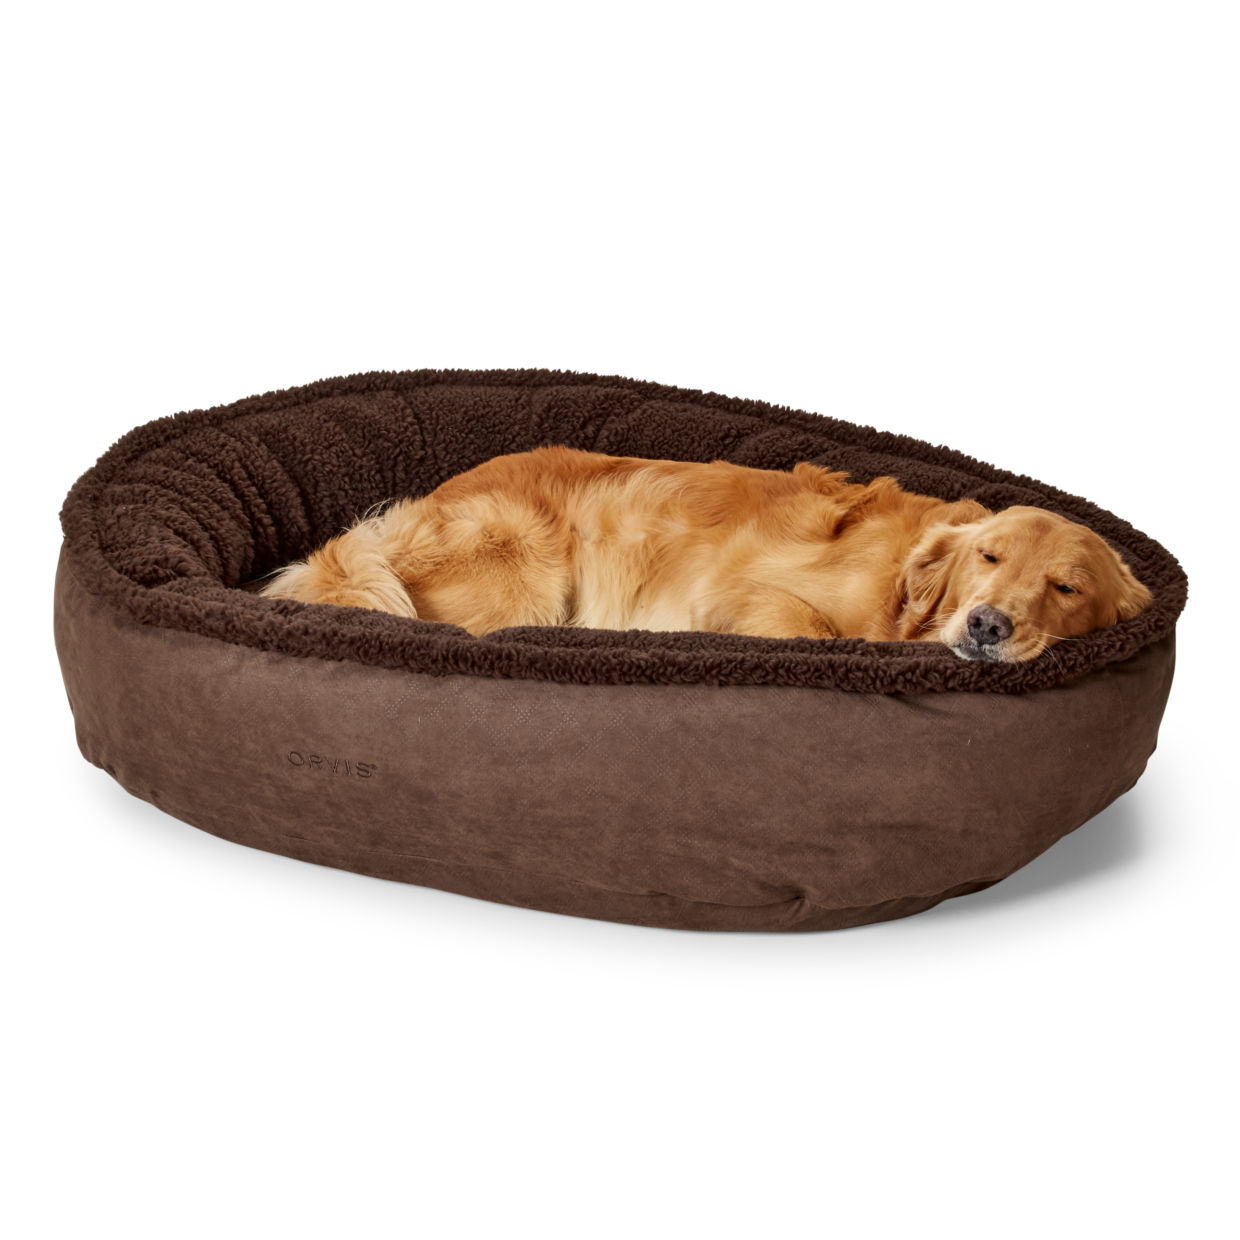 Orvis AirFoam Wraparound Dog Bed with Fleece